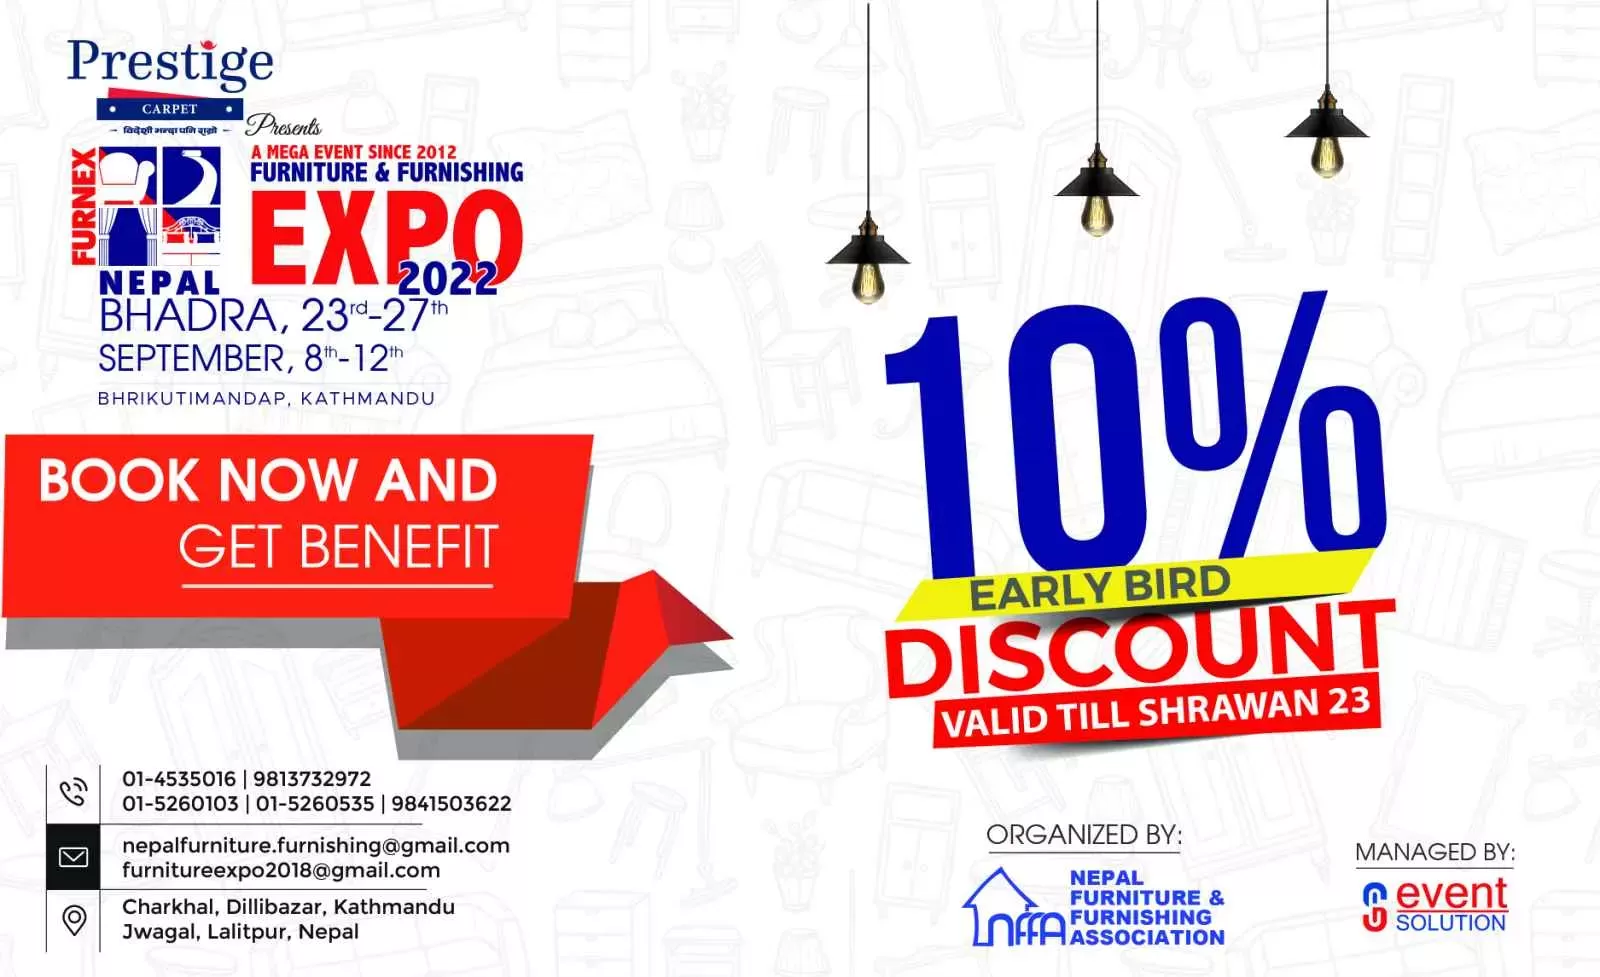 Furniture and Furnishing EXPO happening at Bhrikutimandap Exhibition Hall